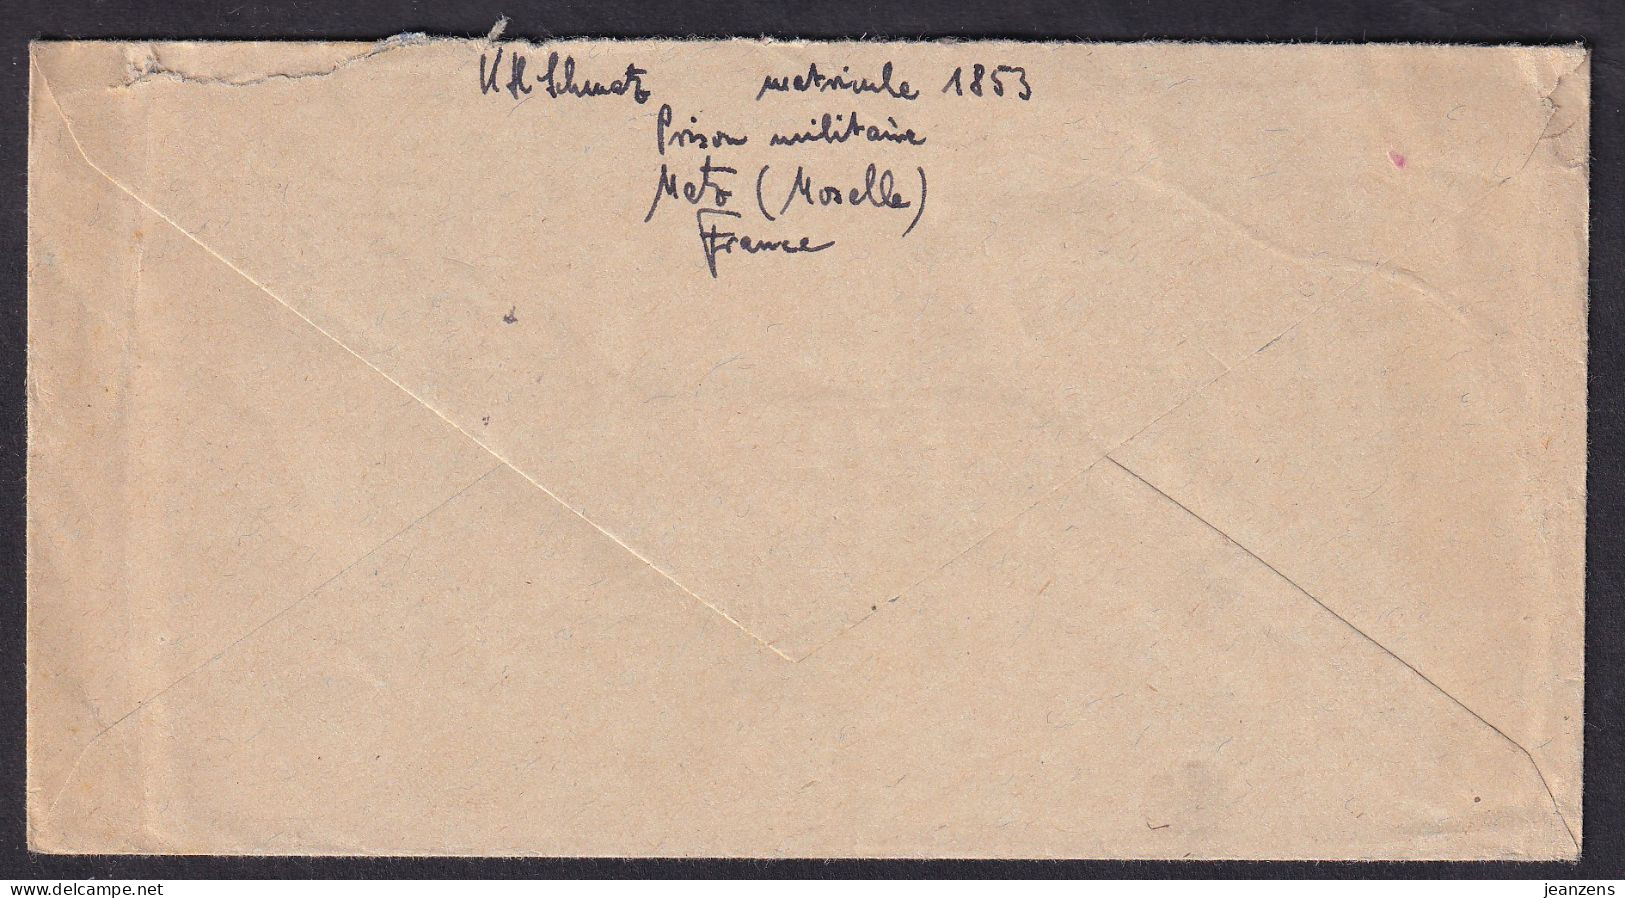 Lettre Aff 2x 5f Marianne De Gandon Obl Metz 16.06.1947 -> Allemagne Zensur/Censure Prison Militaire Metz + US - WW II